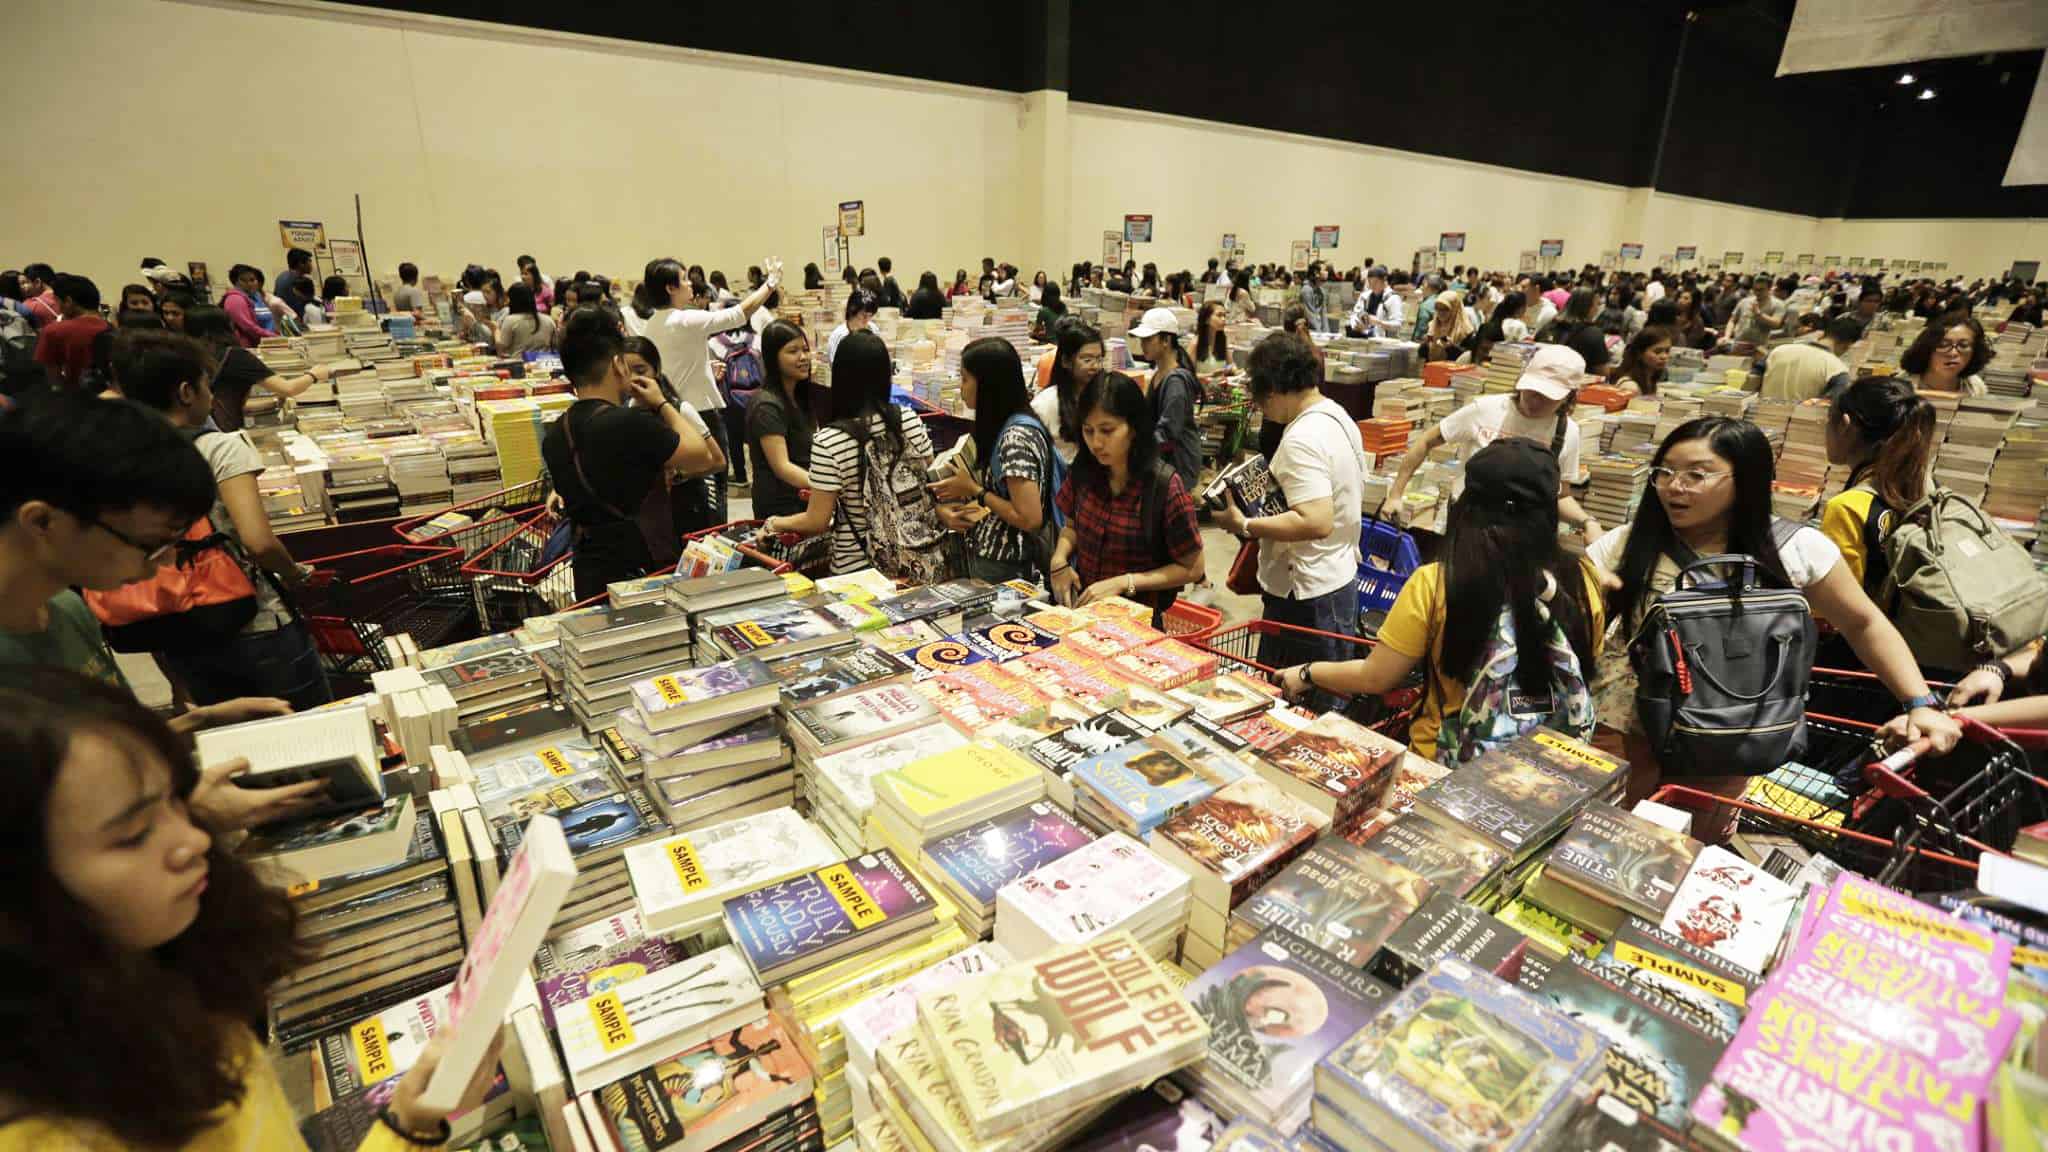 Big Bad Wolf S Biggest Book Sale In Cebu This July 13 23 Sugbo Ph Cebu